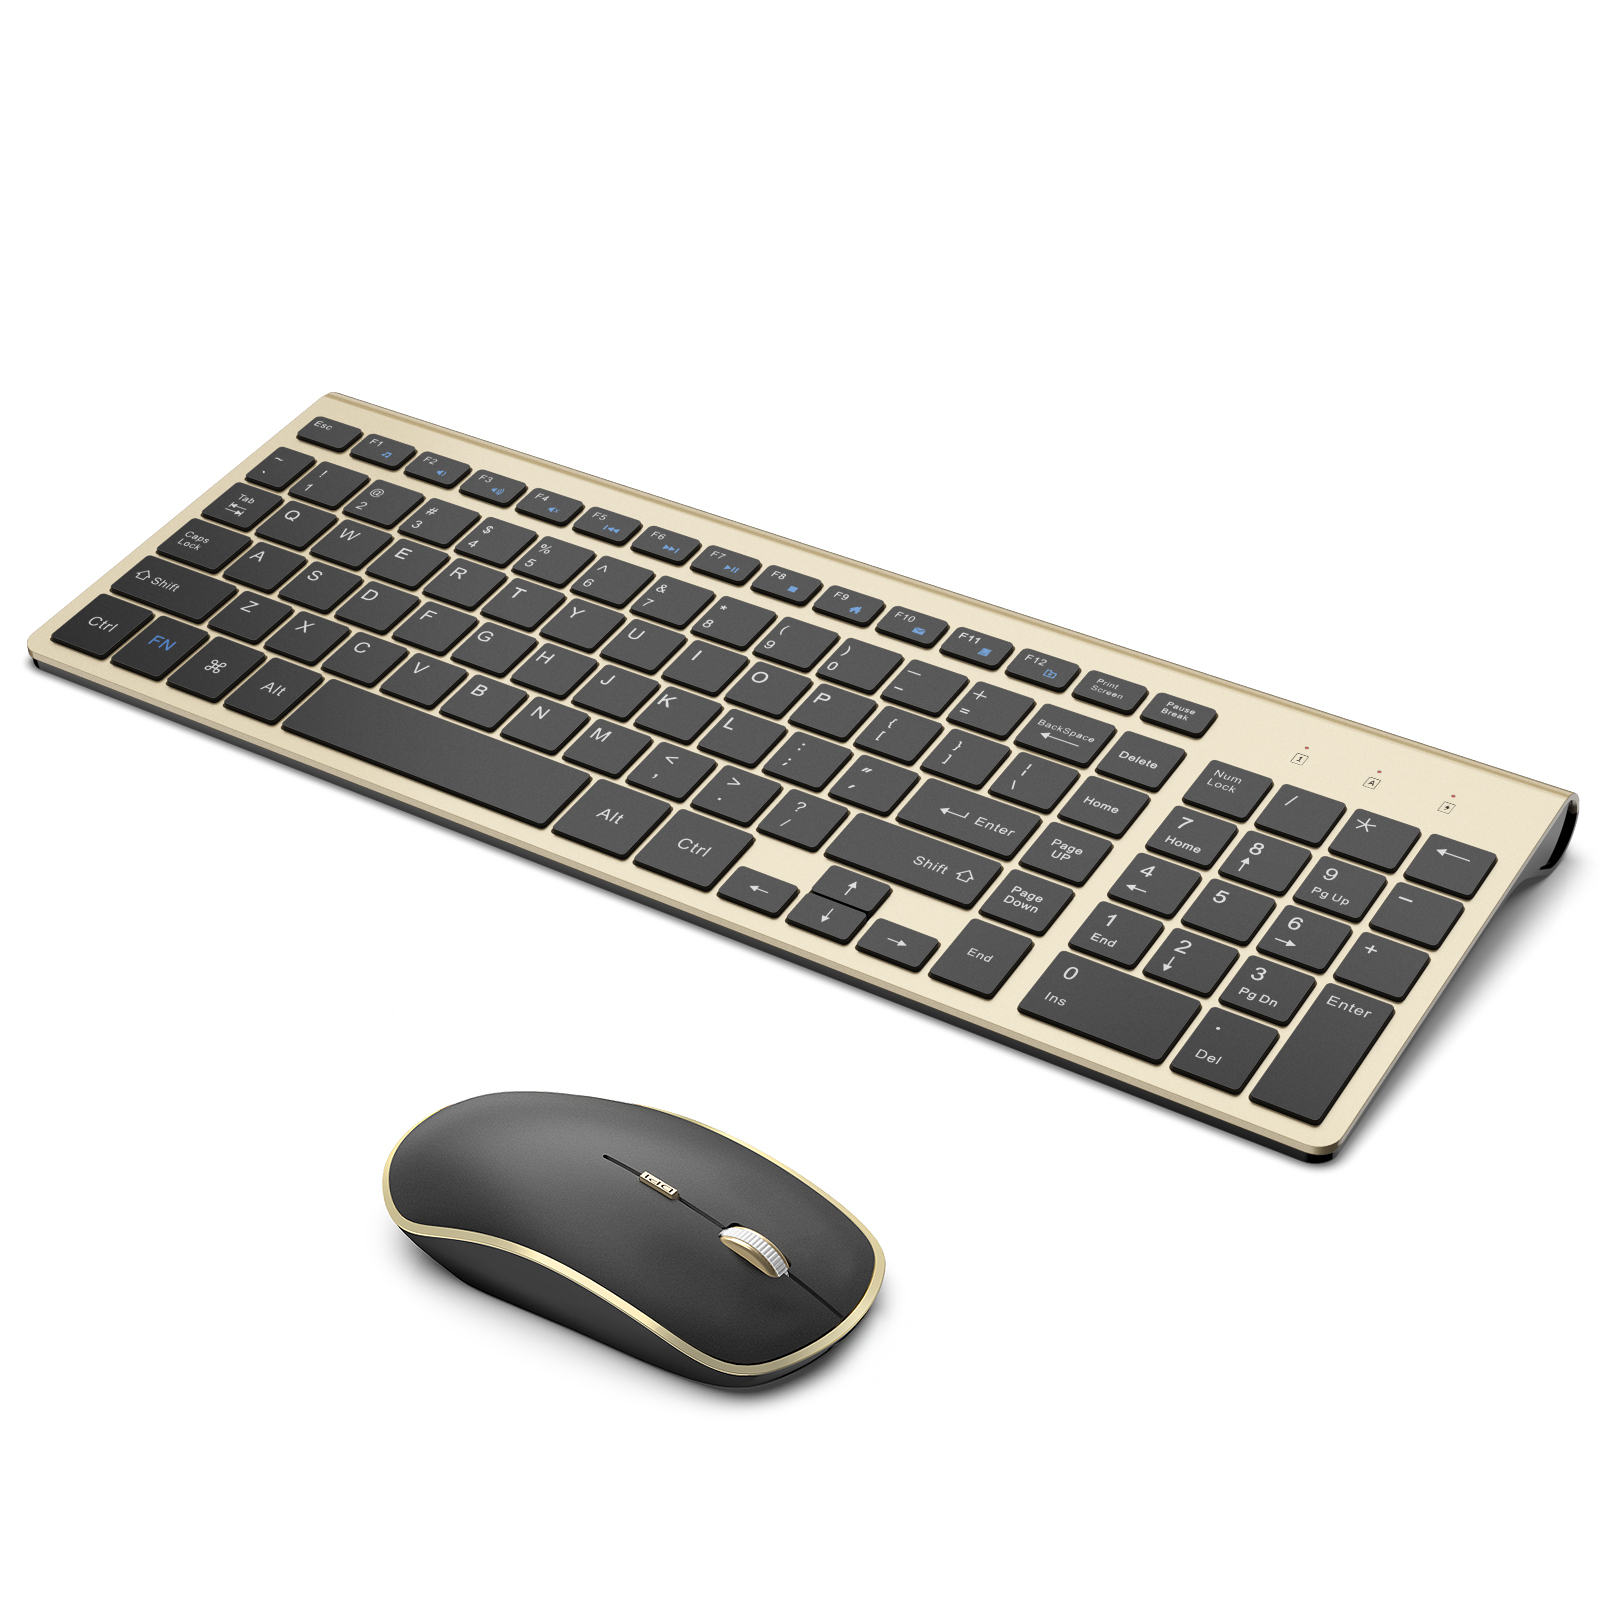 Wireless Keyboard Mouse, J JOYACCESS 2.4G Thin Wireless Computer Keyboard and Mouse, Ergonomic,Compact, Full Size Perfect for Computer, Windows,Desktop, PC, Laptop (Black Gold)